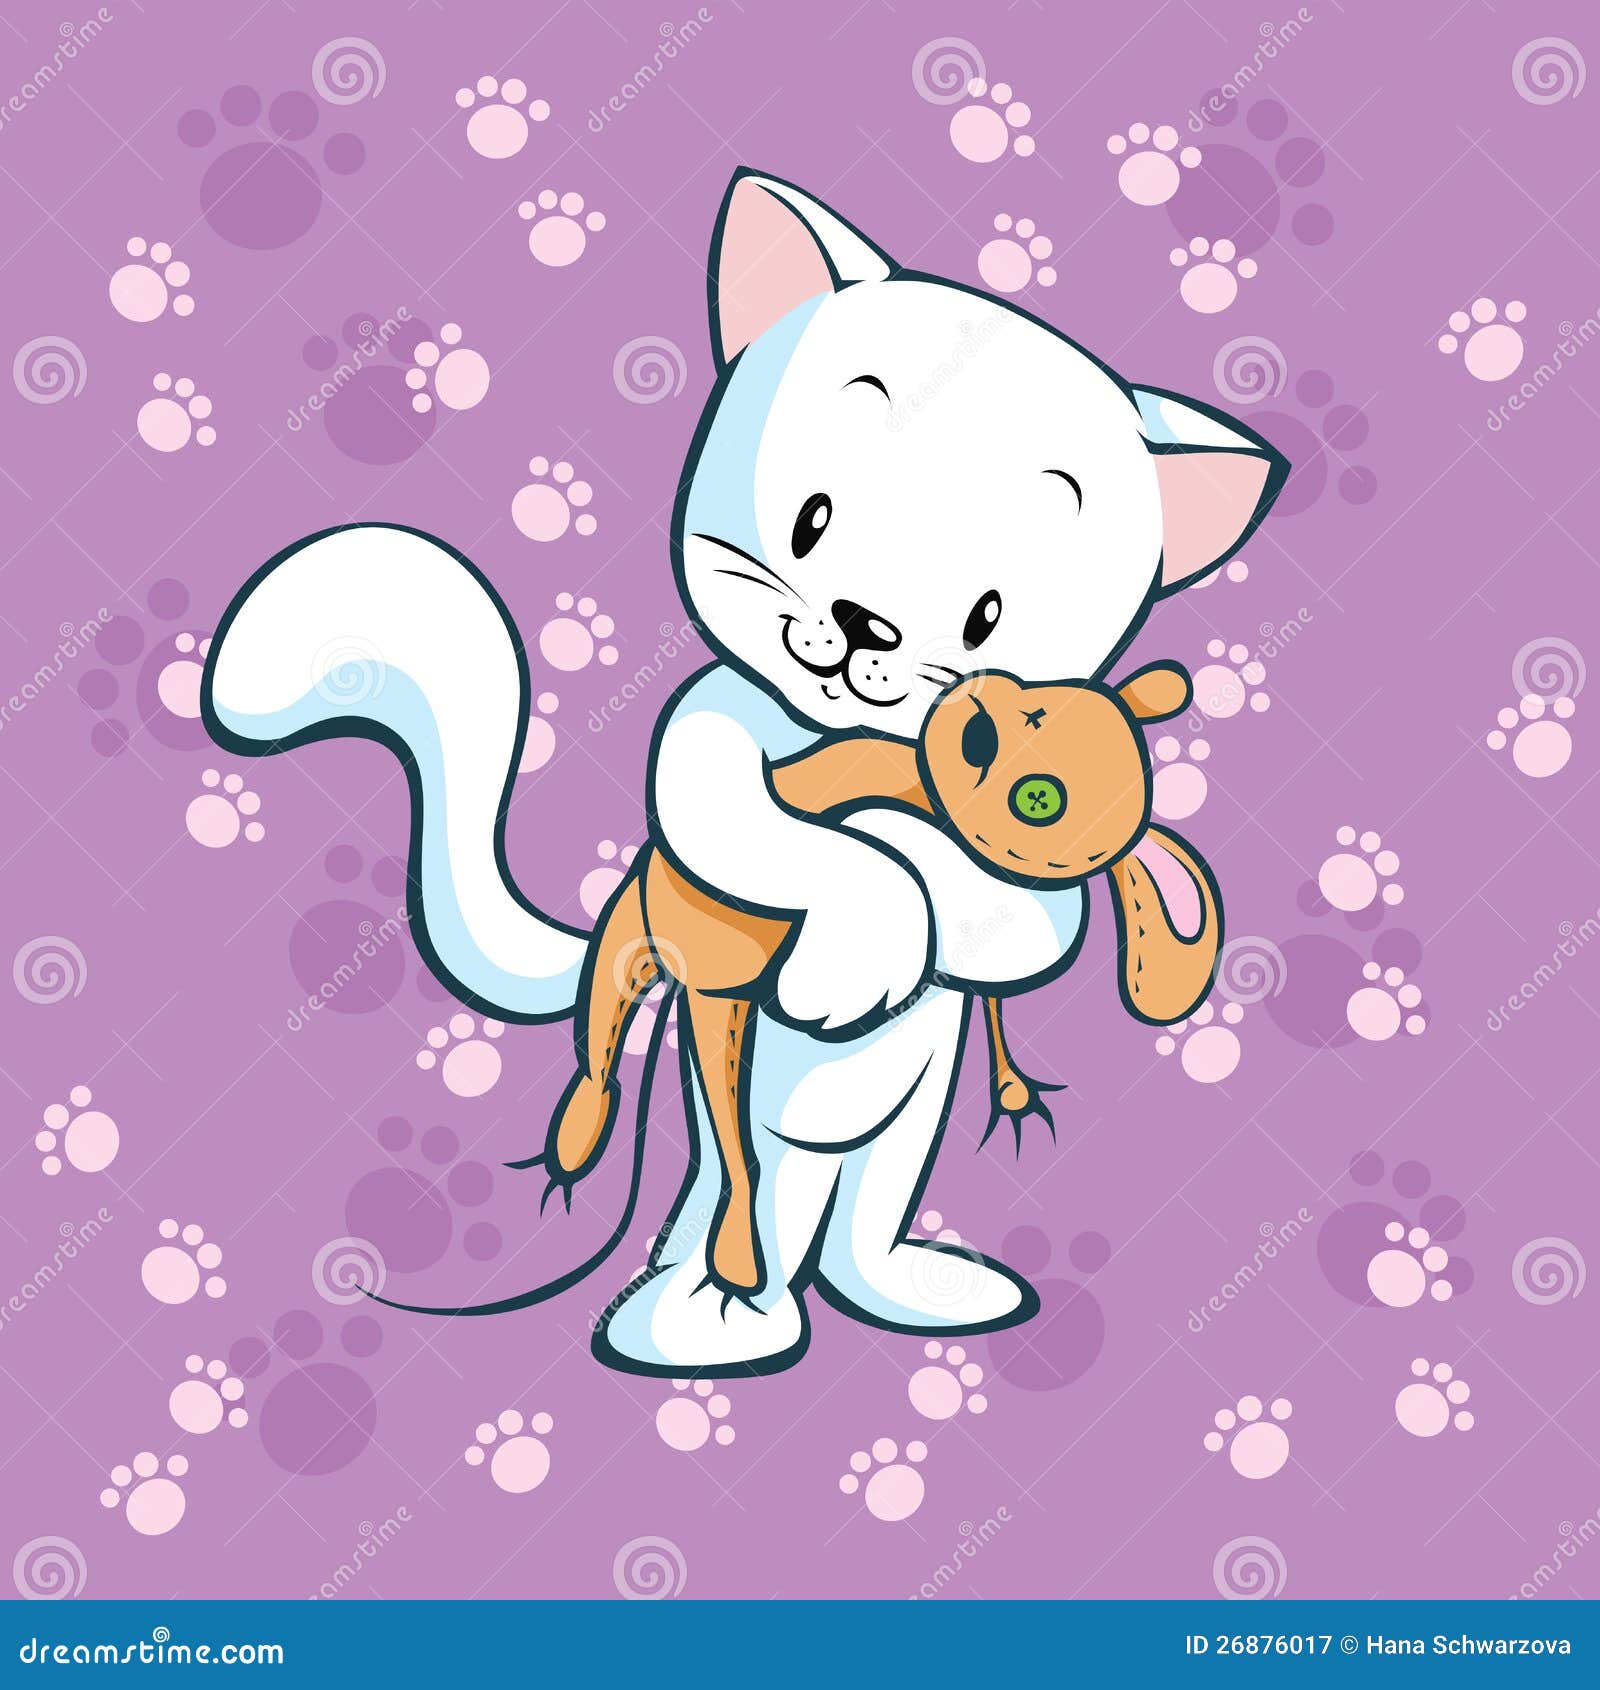 Cute Kitty Cartoon Vector | CartoonDealer.com #17401799